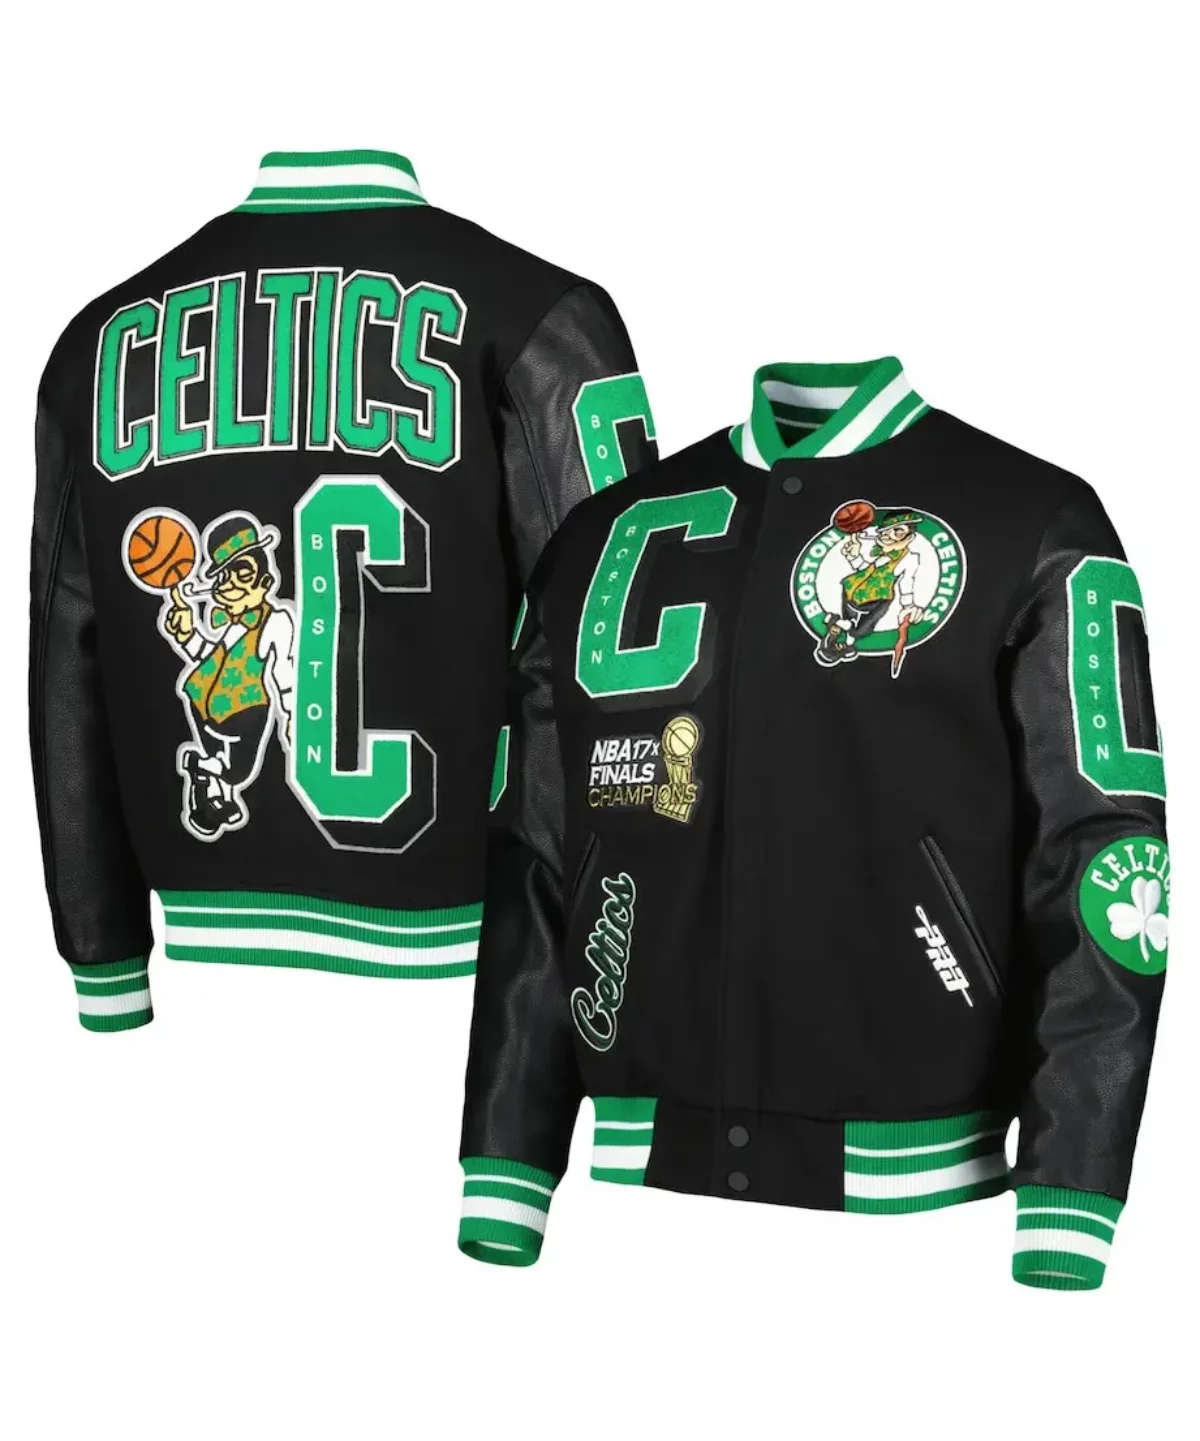 Vintage Boston Celtics Pro Player Leather Jacket - Maker of Jacket